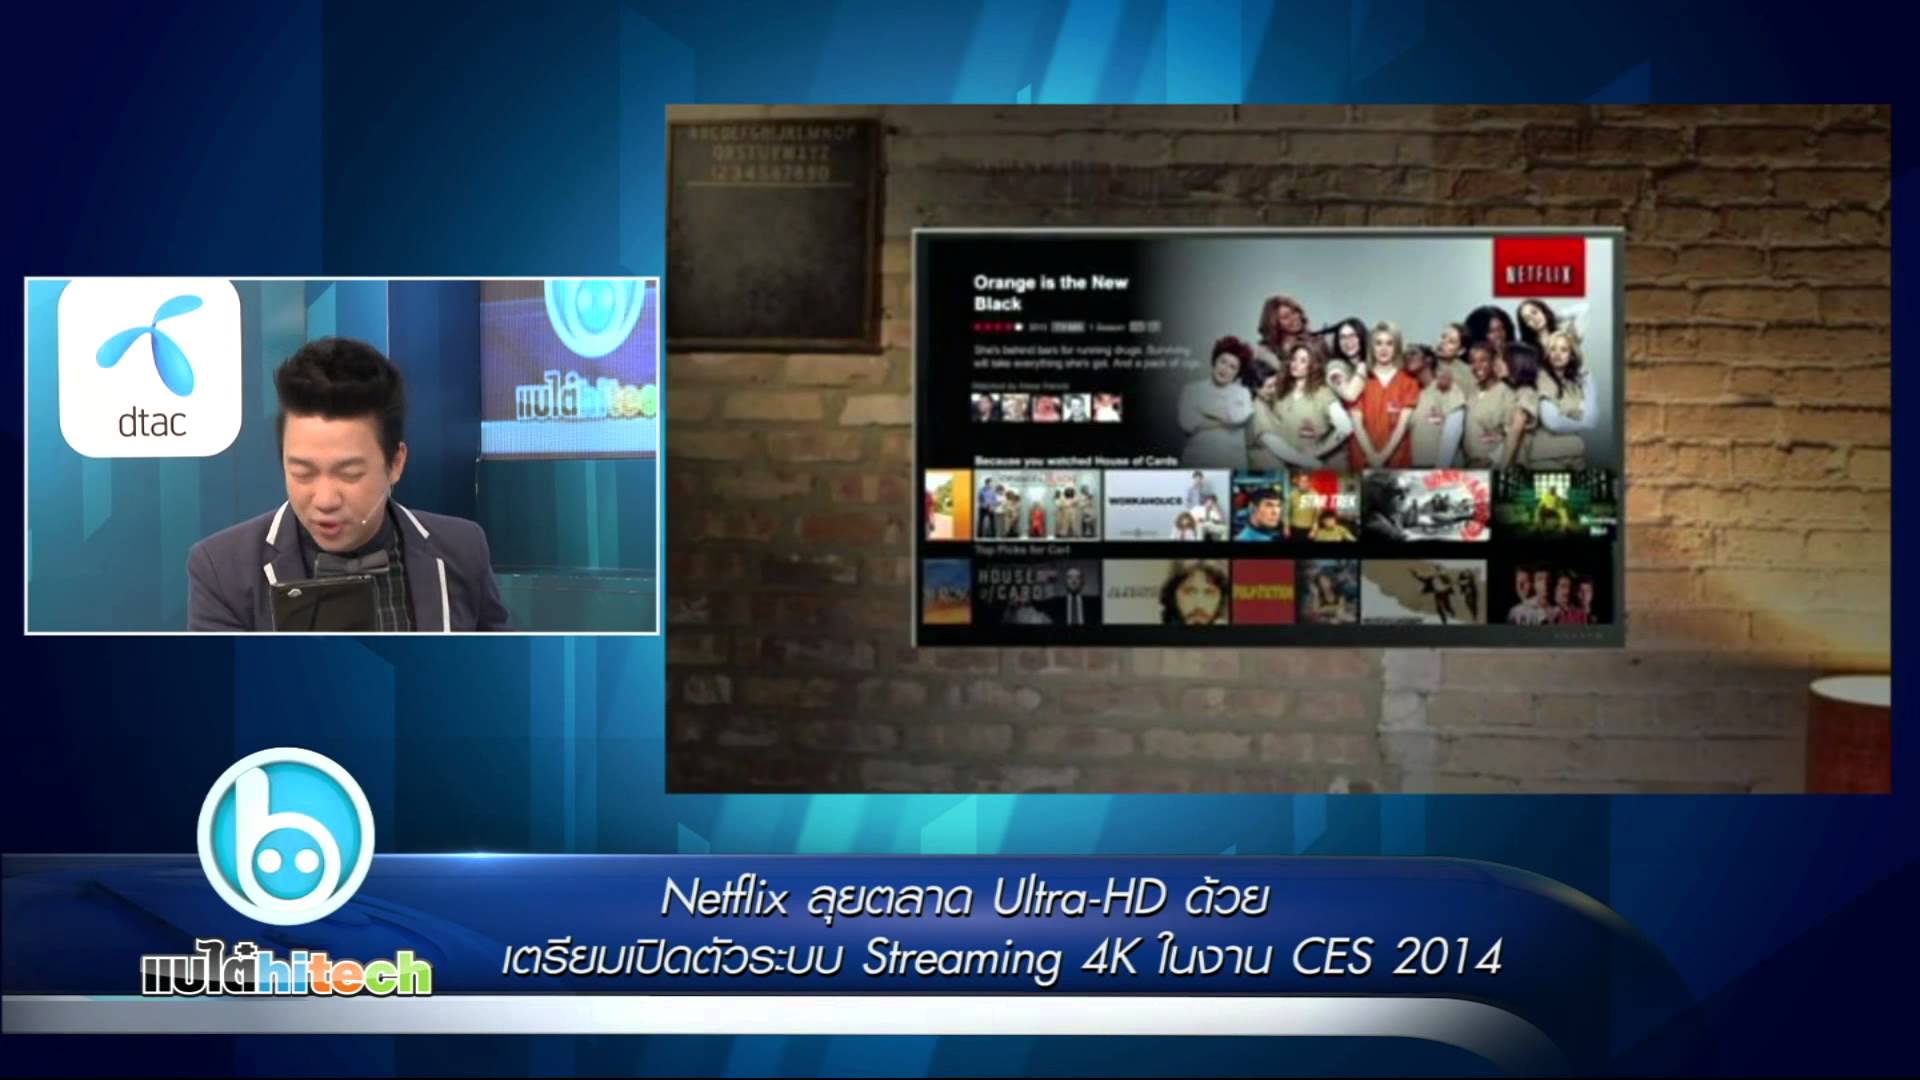 Netflix ลุยตลาด Ultra-HD ด้วย เตรียมเปิดตัวระบบสตรีม 4K ใน CES2014